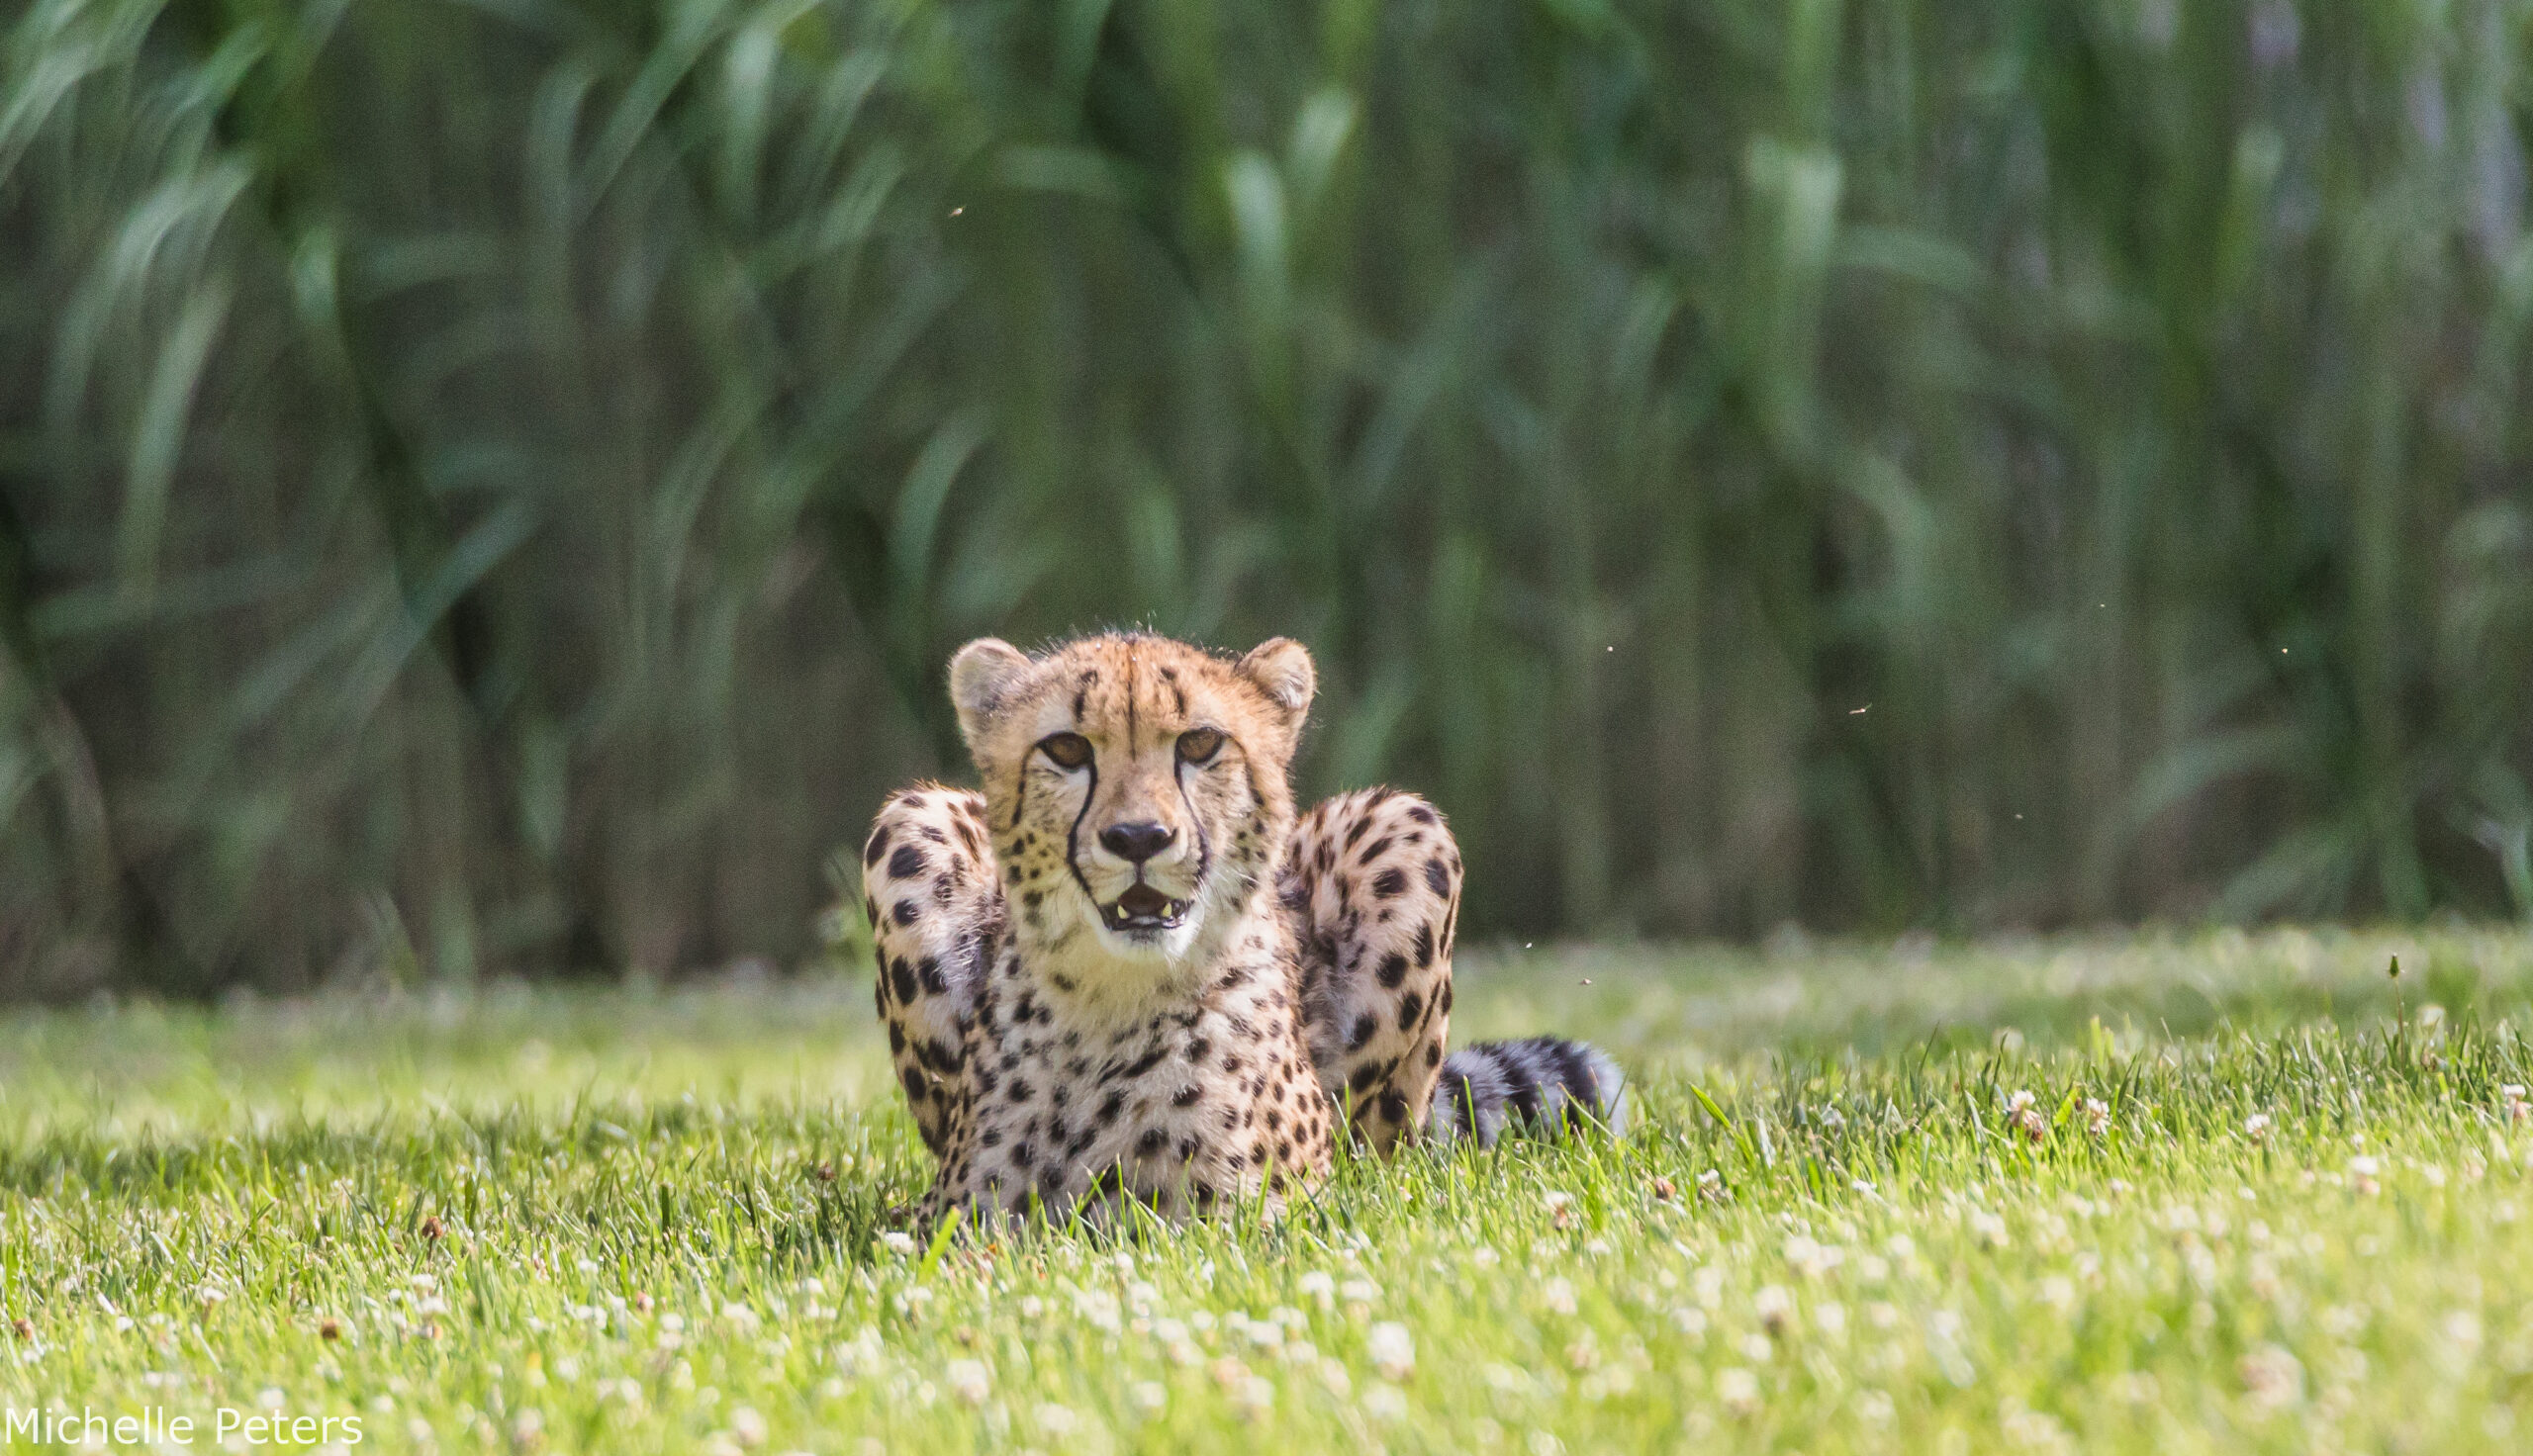 a cheetah sitting in the grass